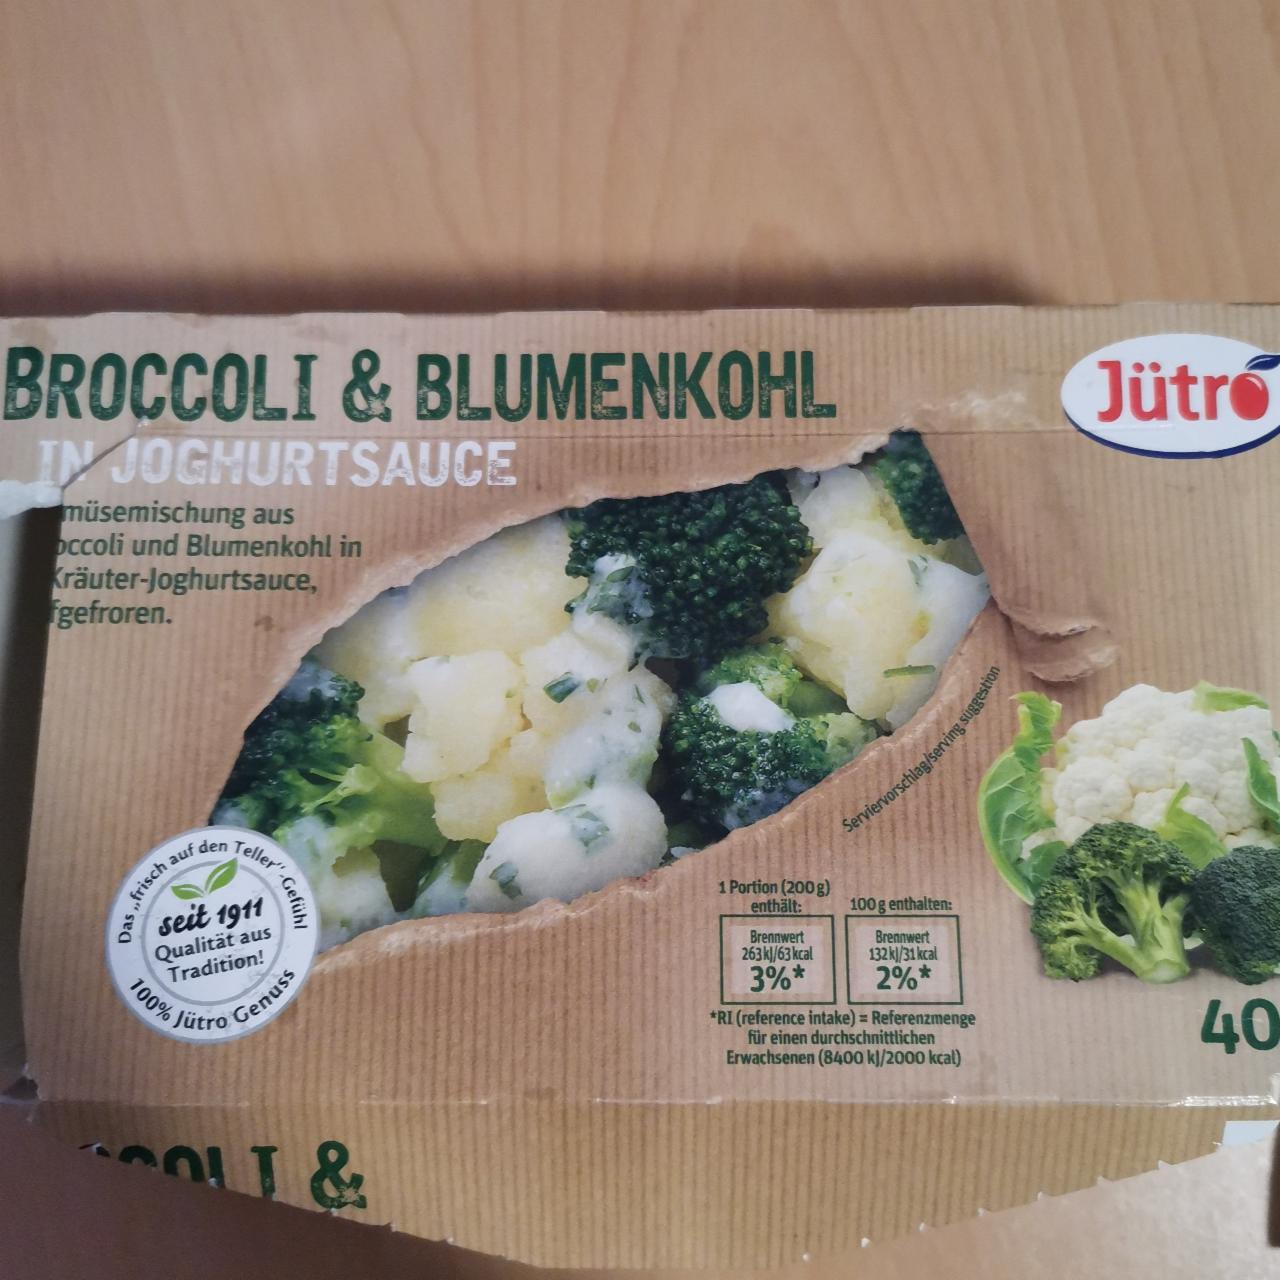 Фото - Broccoli&Blumenkohl in joghurtsauce Jütro